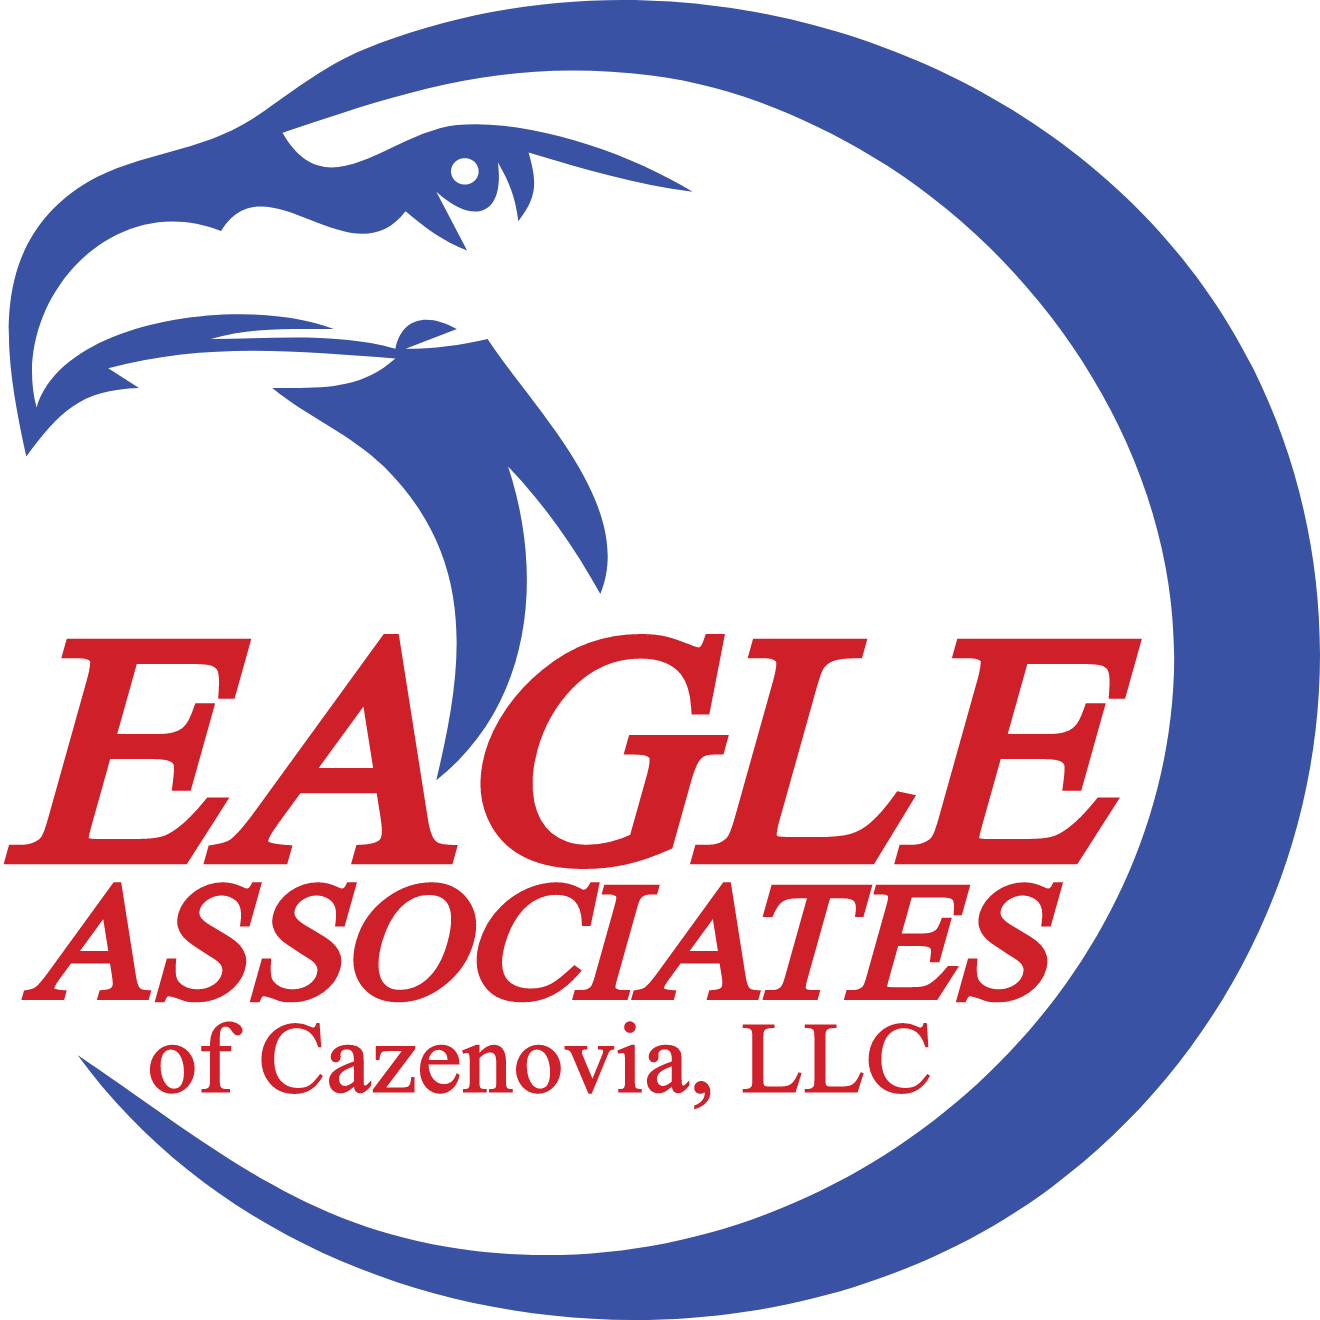 Eagle Associates of Cazenovia